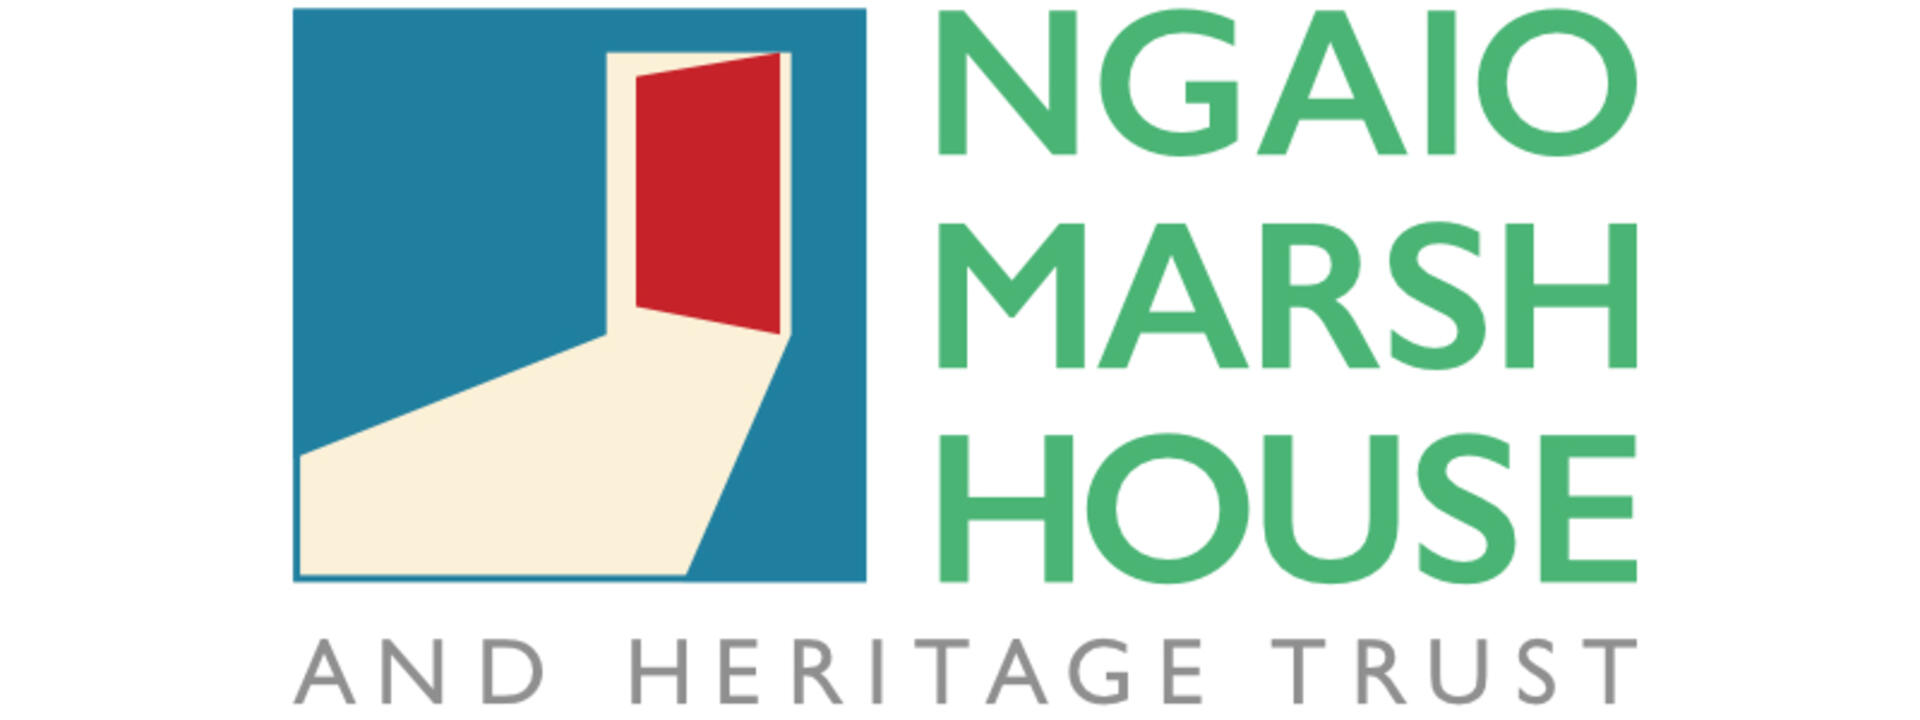 Ngaio Marsh House-Horizontal Full Colour-Large.jpg